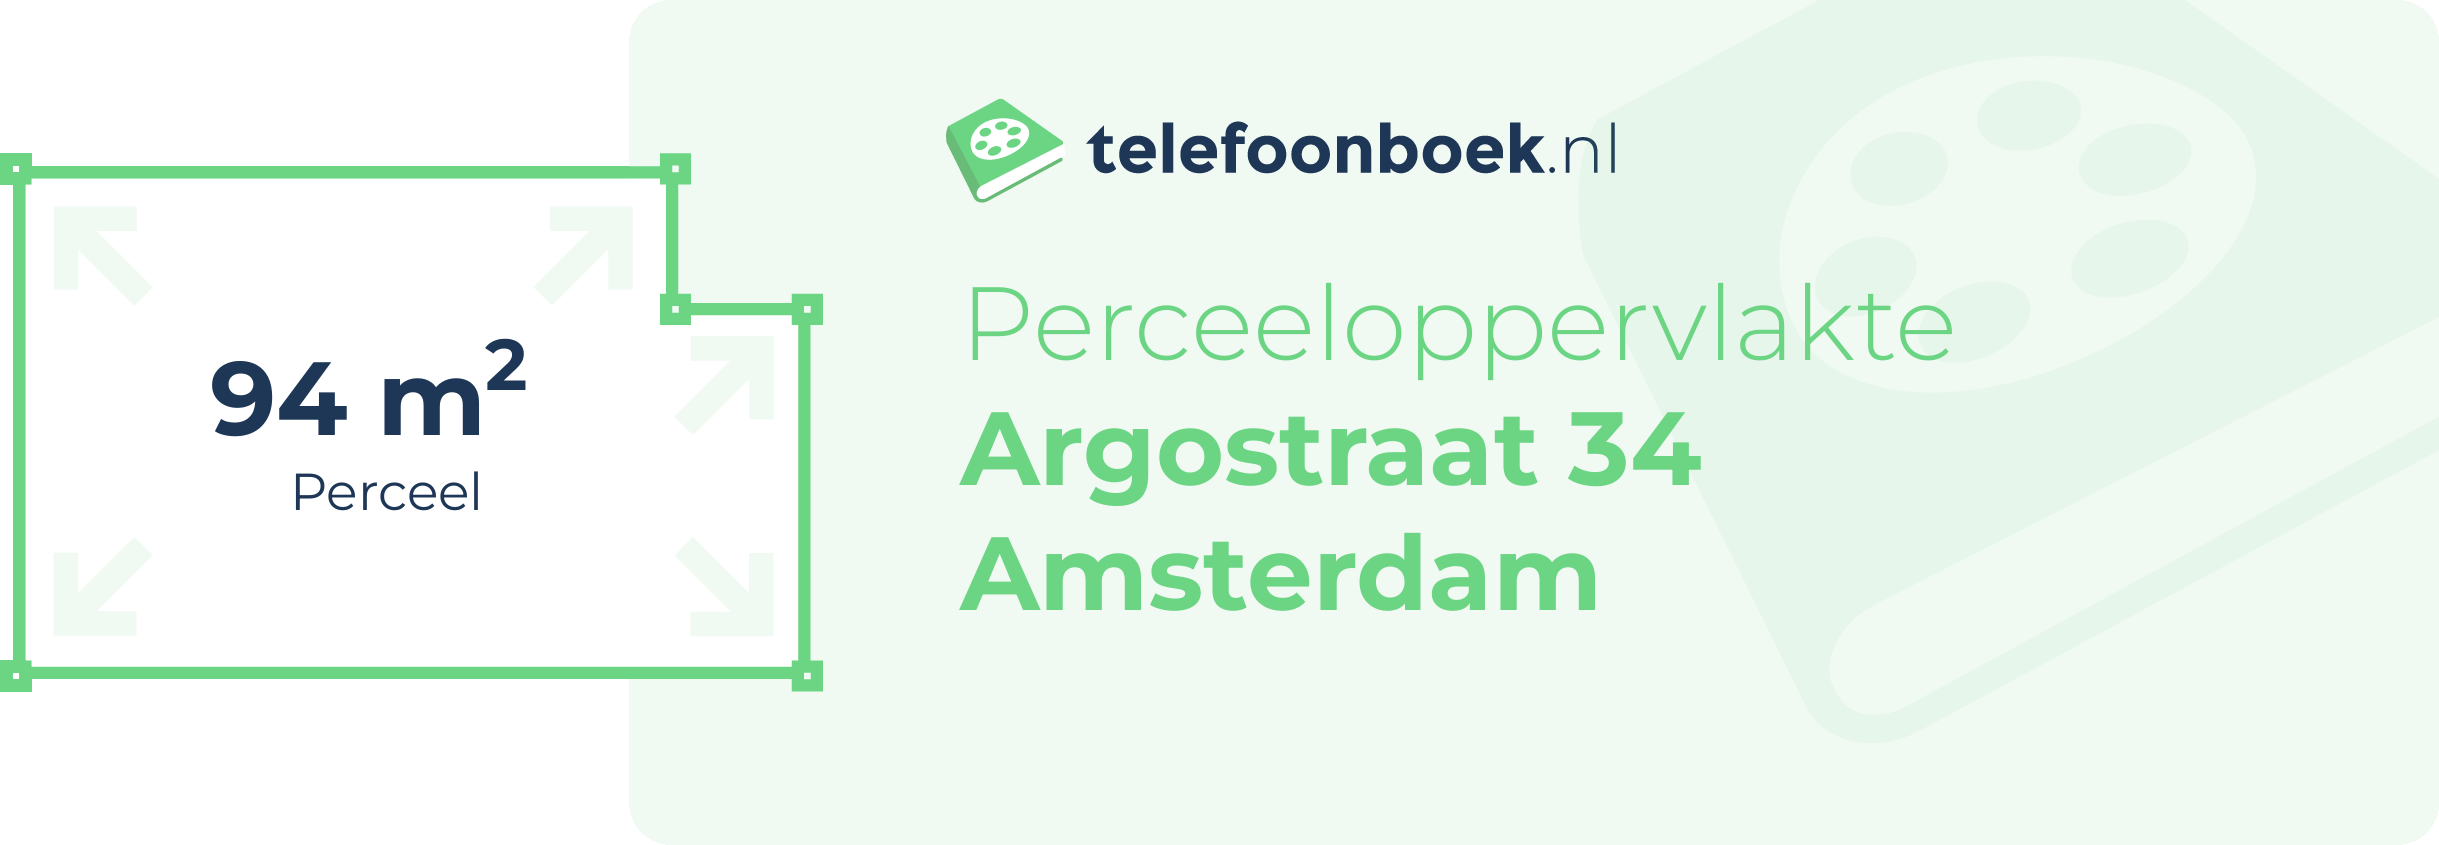 Perceeloppervlakte Argostraat 34 Amsterdam